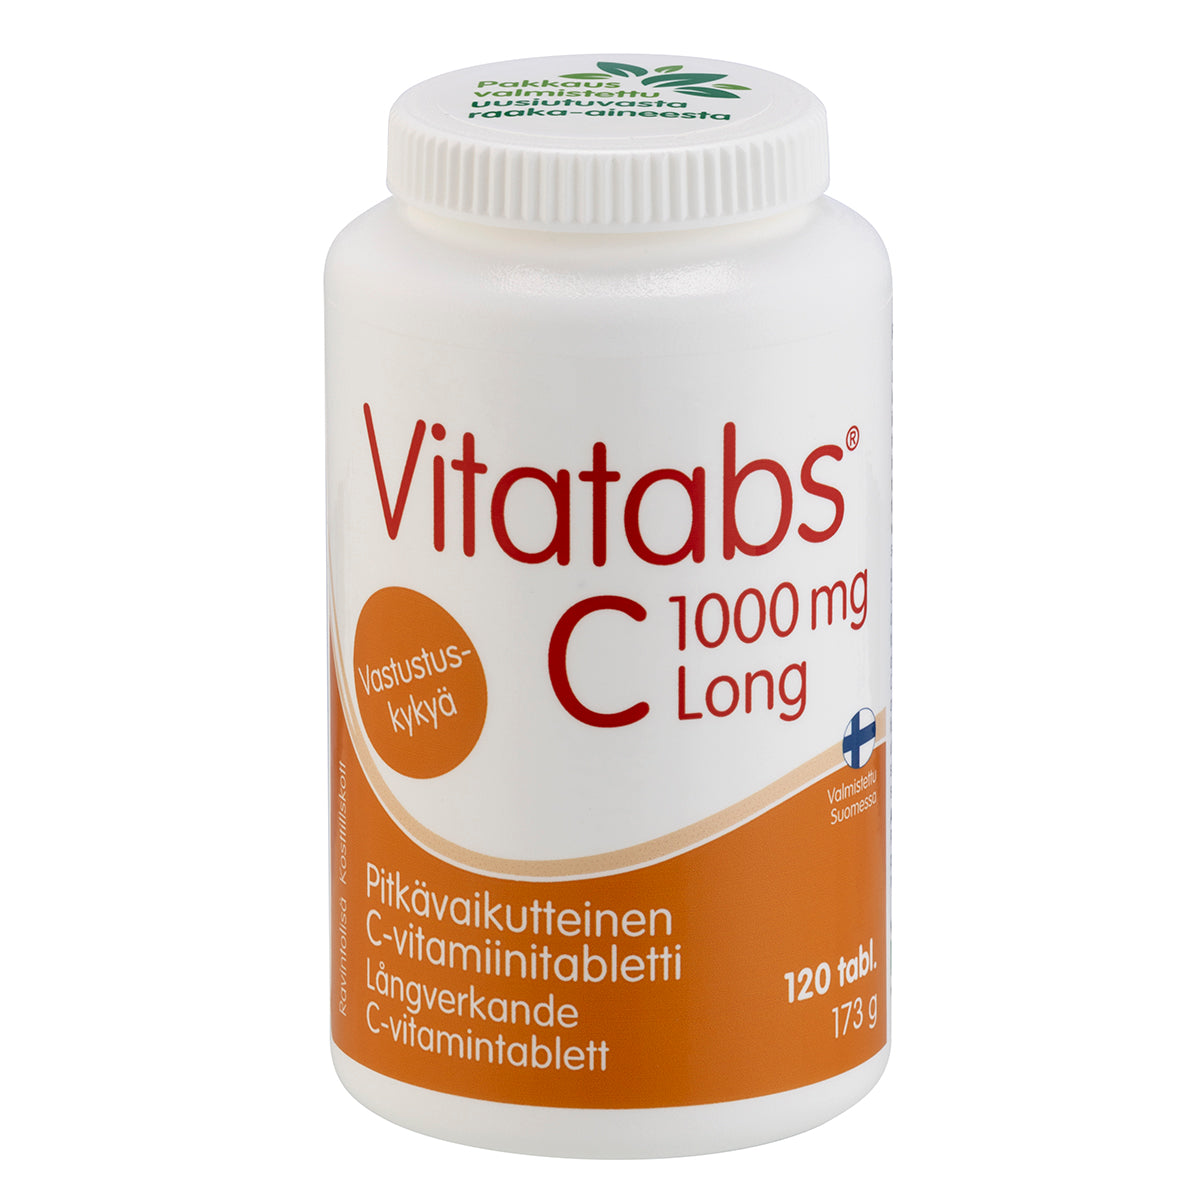 Vitatabs C 1000 mg Long -  Pitkävaikutteinen C-vitamiinitabletti 120 tabl.